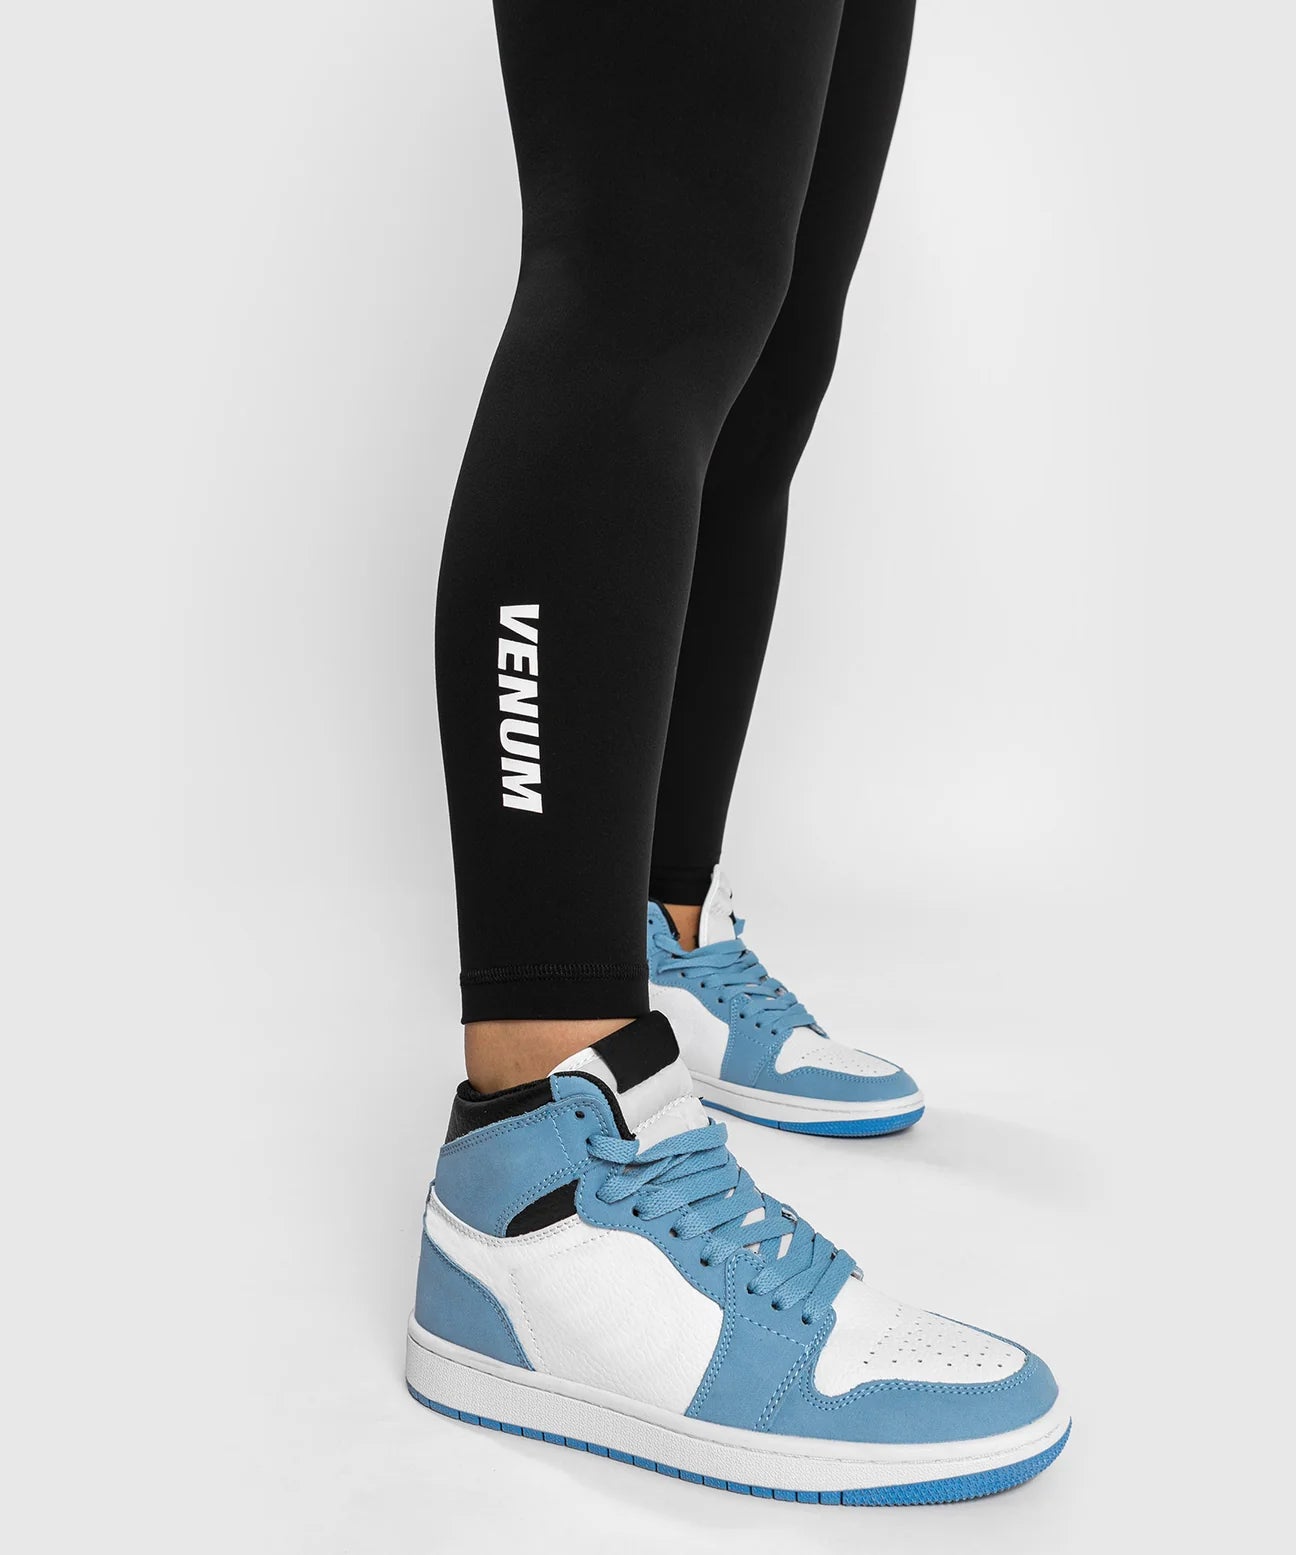 Venum Essential Lifestyle Leggings - high-waisted, compressive, logo detailing.